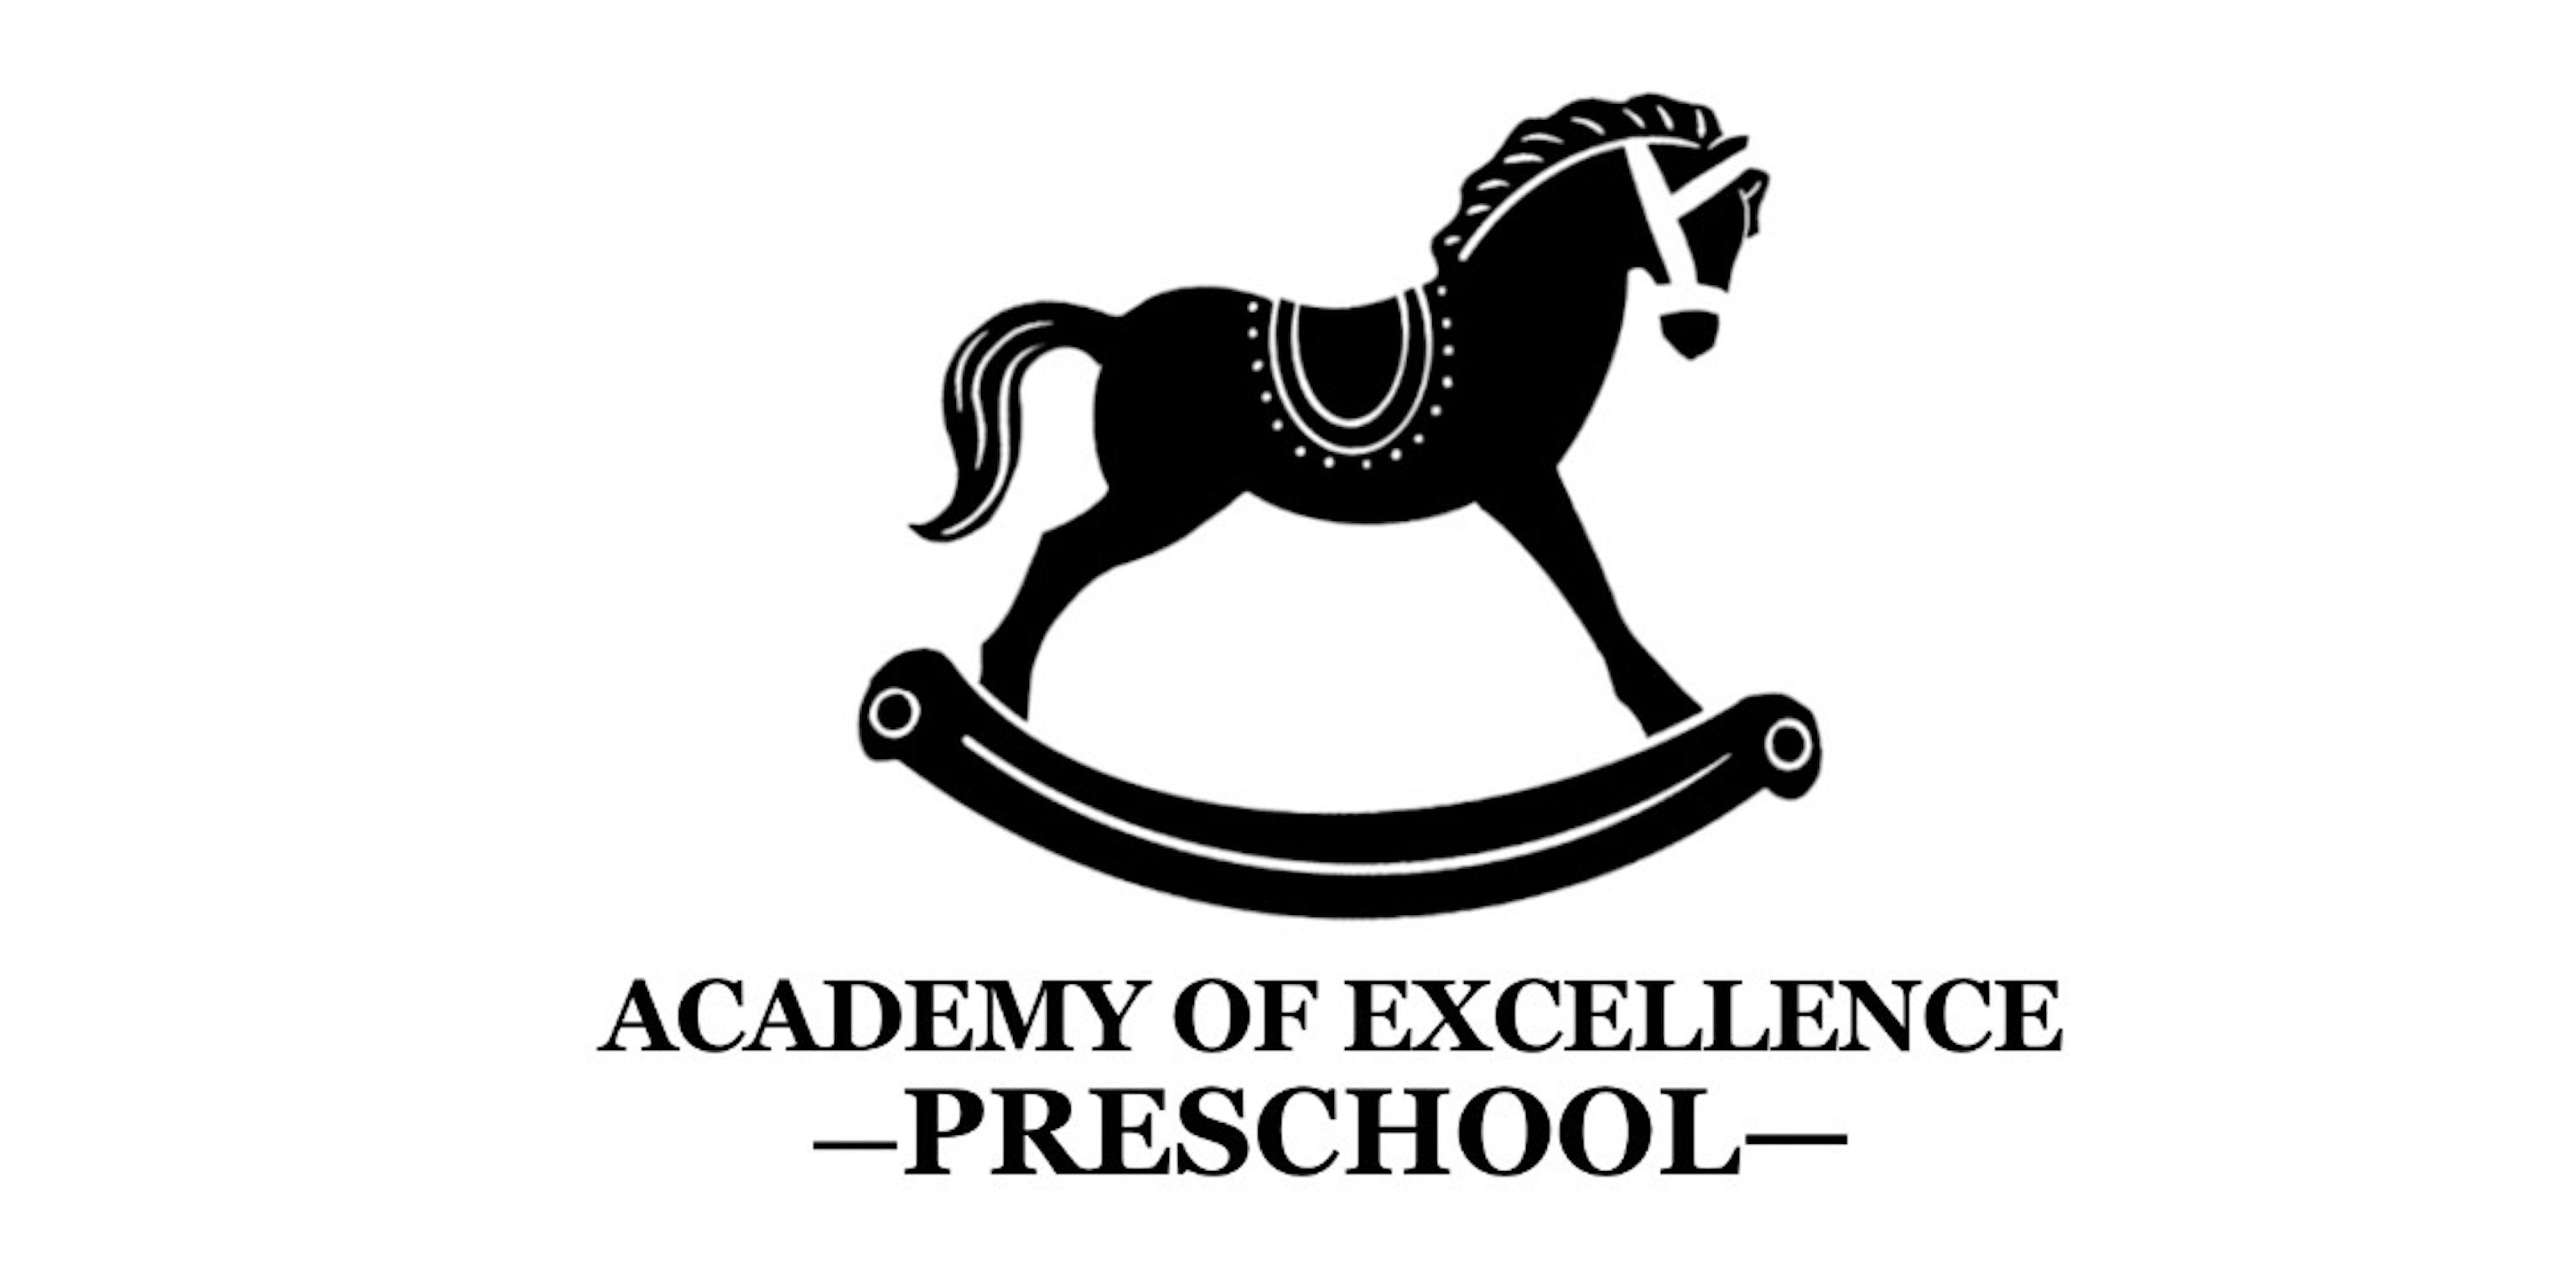 Academy Of Excellence Preschool - Daycare In Jersey City Nj - Winnie